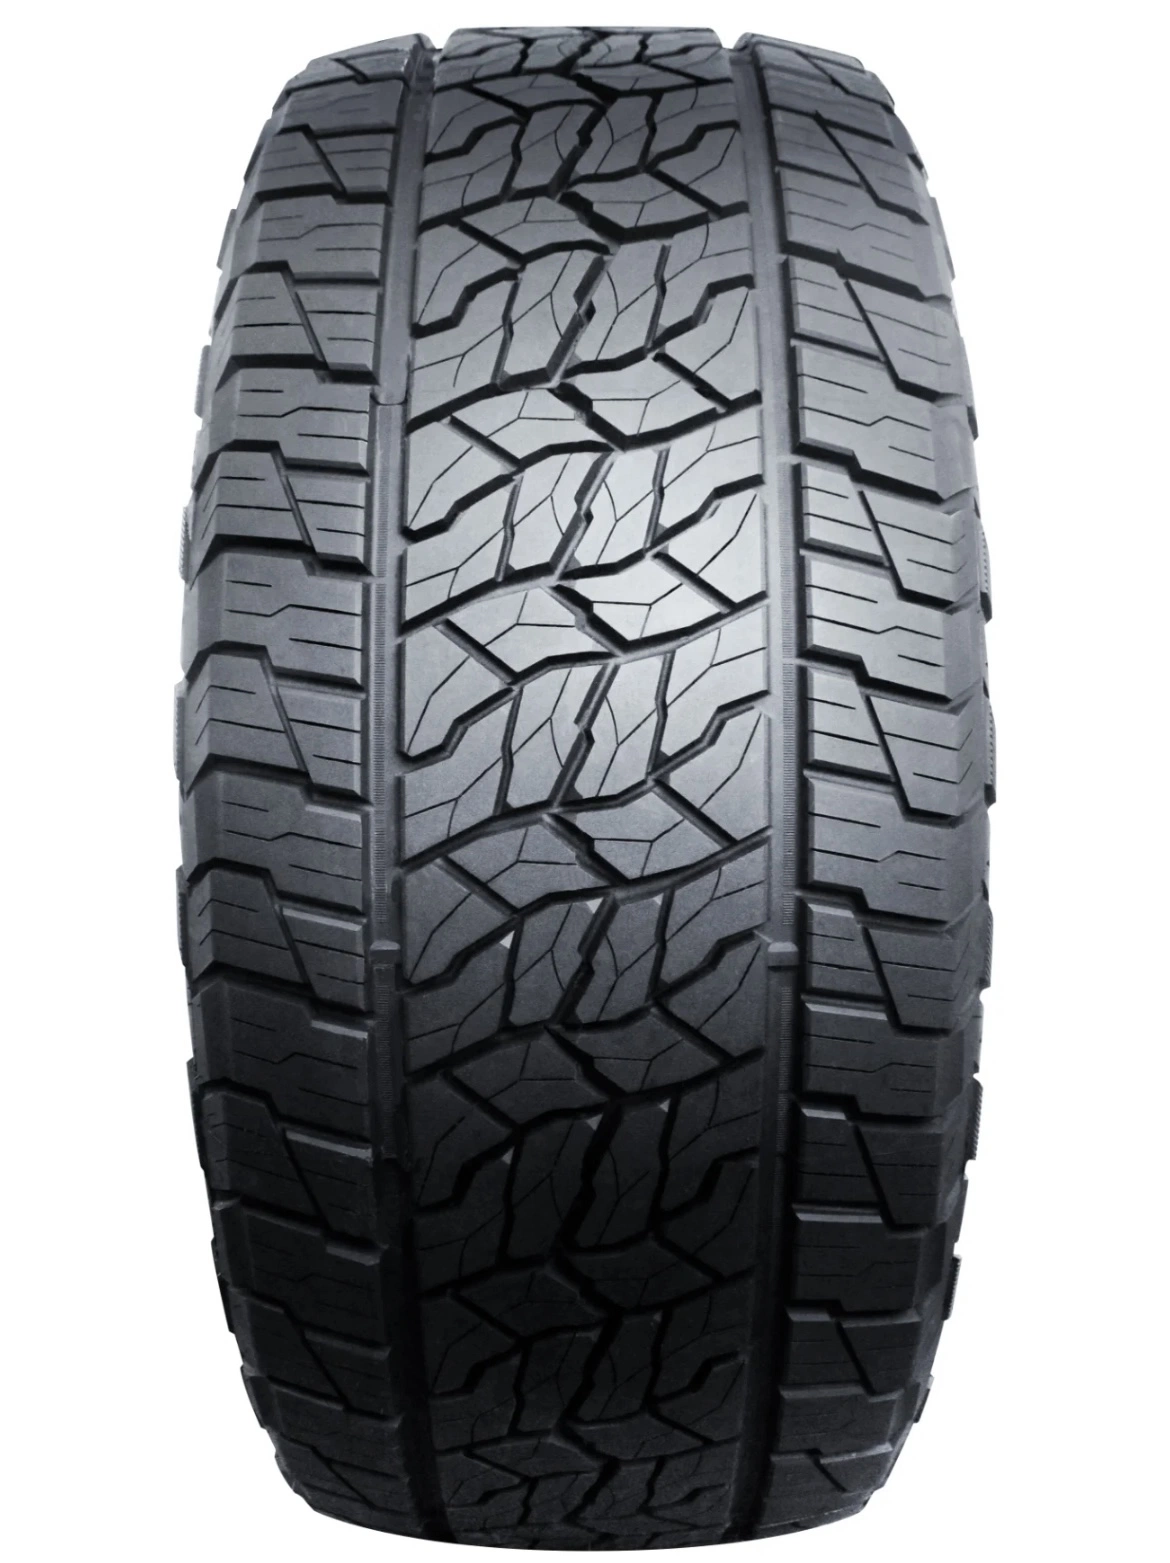 Tubeless Tire 225/60r17 225/60r17 235/40r18 235/40r18 LTR/TBR/PCR Vacuum Tyre DOT/ECE/ISO High Performance Tyre